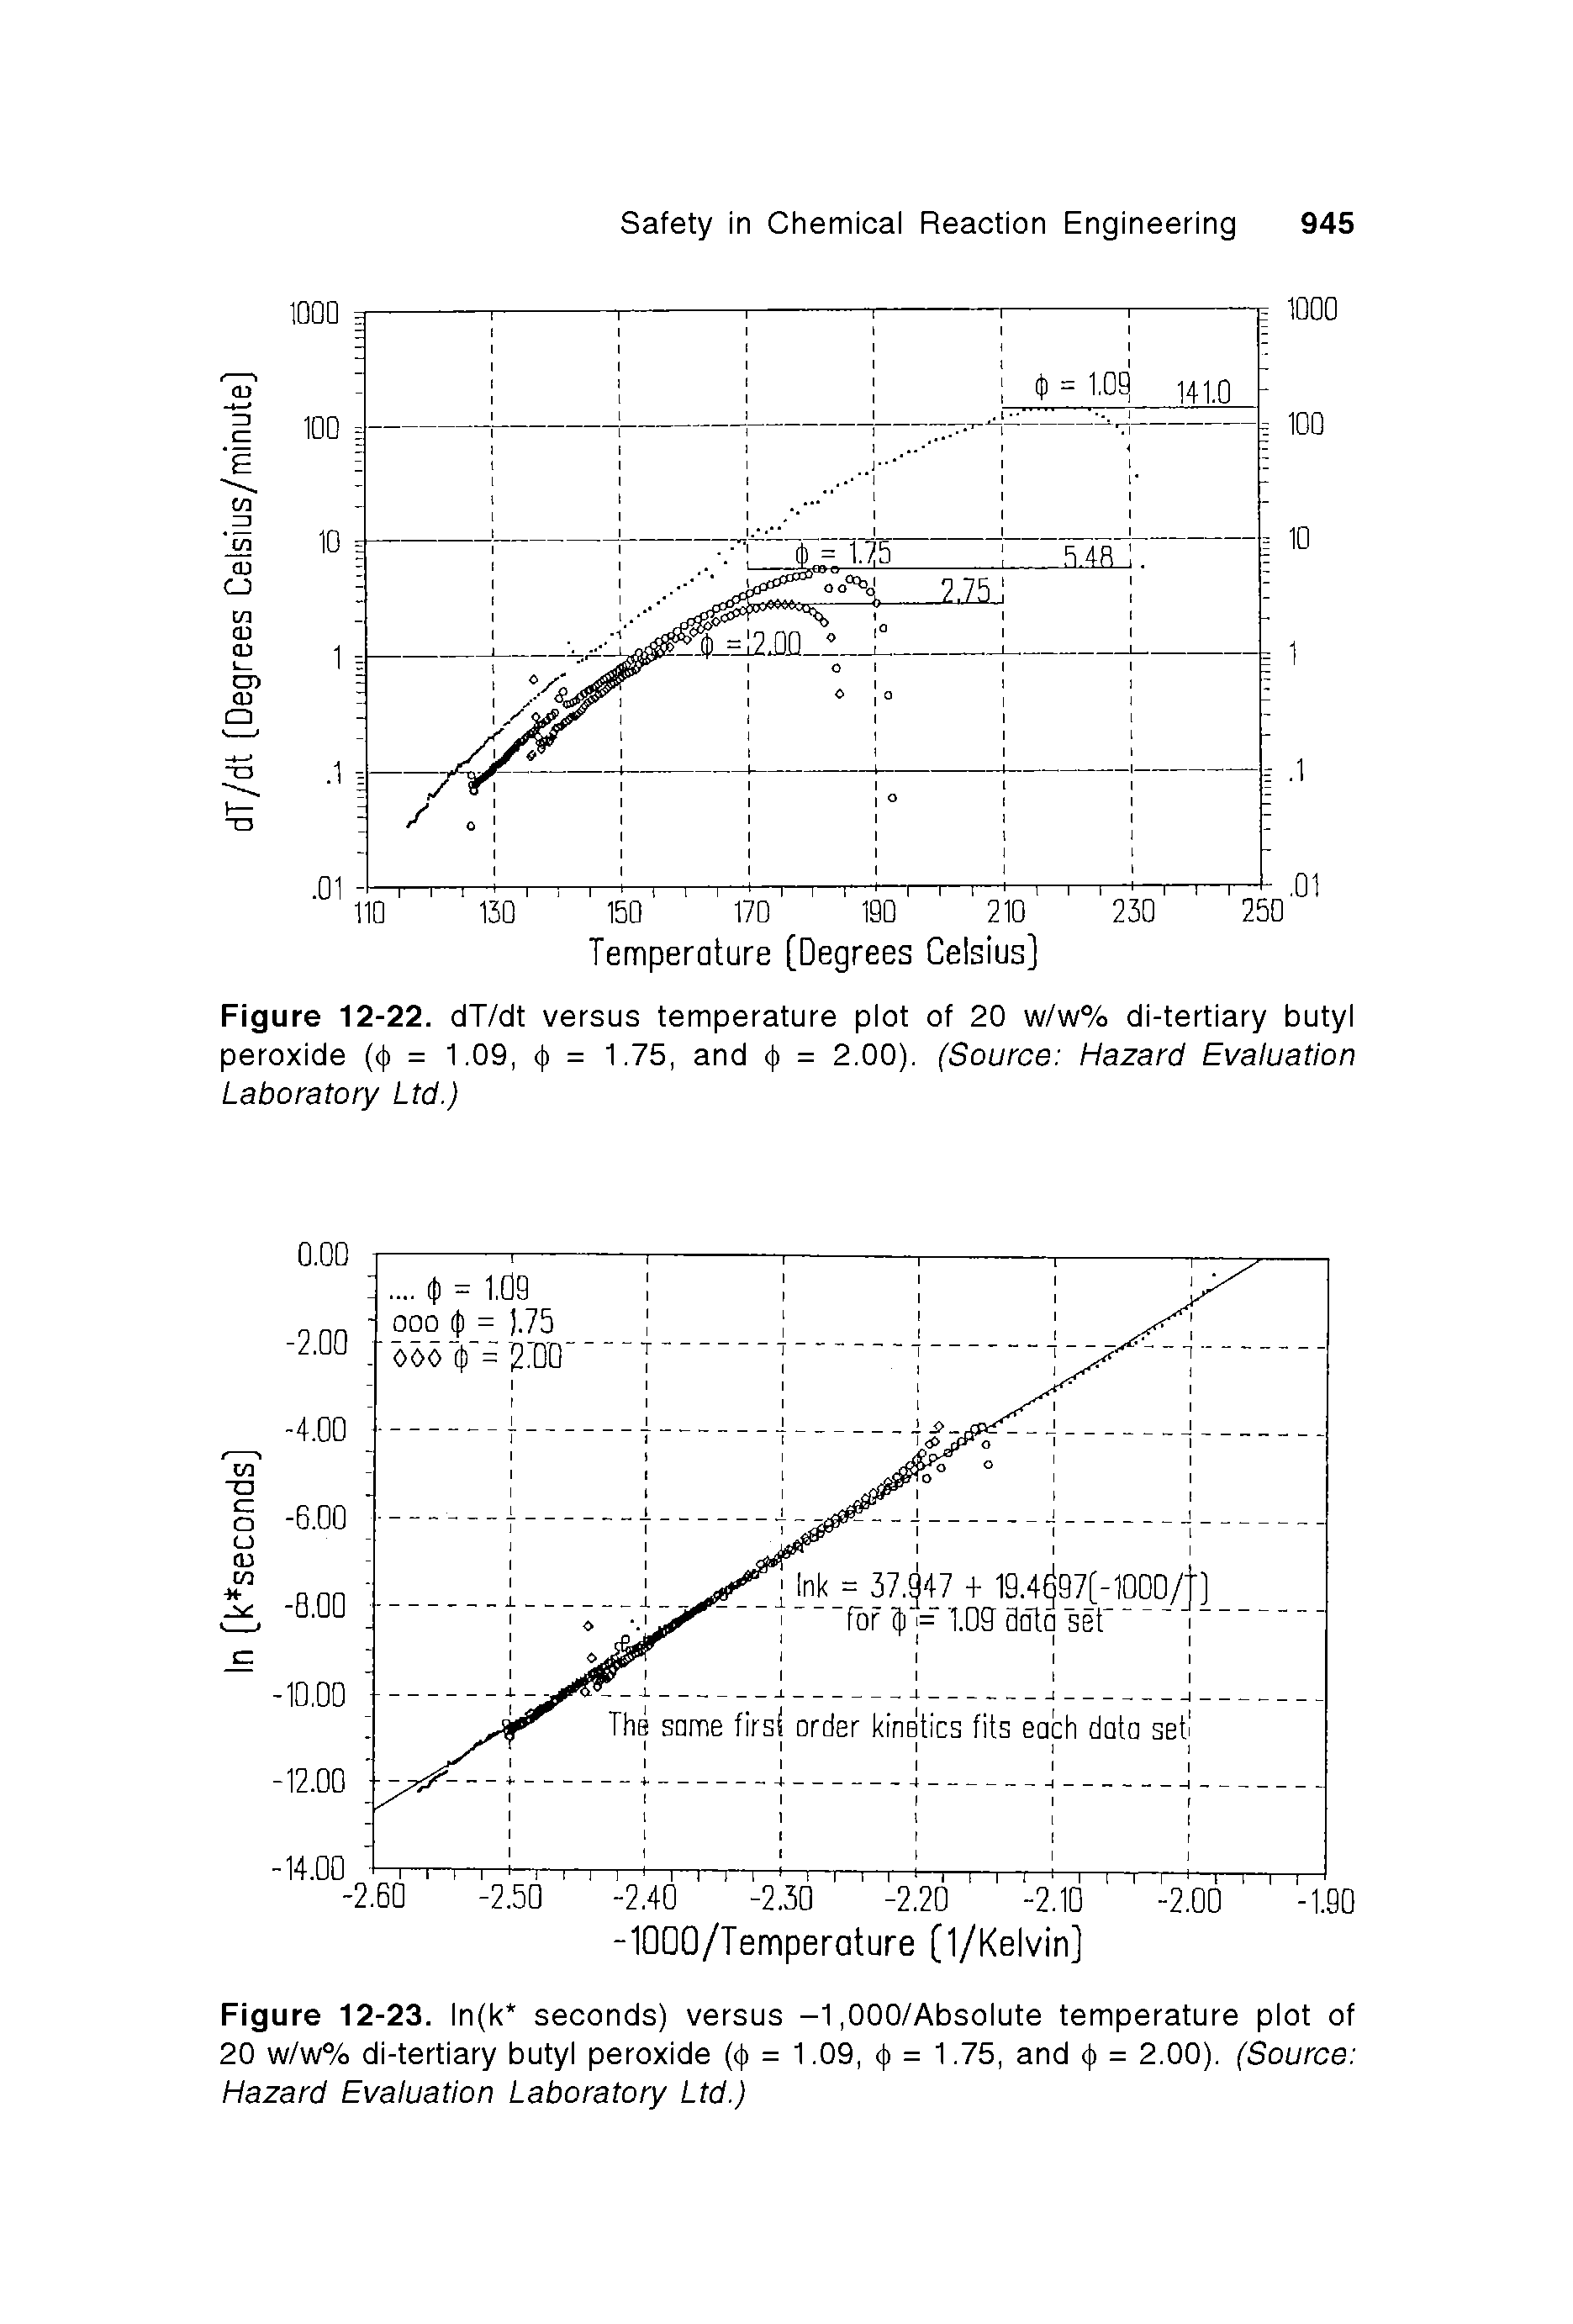 Figure 12-23. In(k seconds) versus -1,000/Absolute temperature plot of 20 w/w% di-tertiary butyl peroxide <(i = 1.09, (() = 1.75, and (() = 2.00). (Source Hazard Evaluation Laboratory Ltd.)...